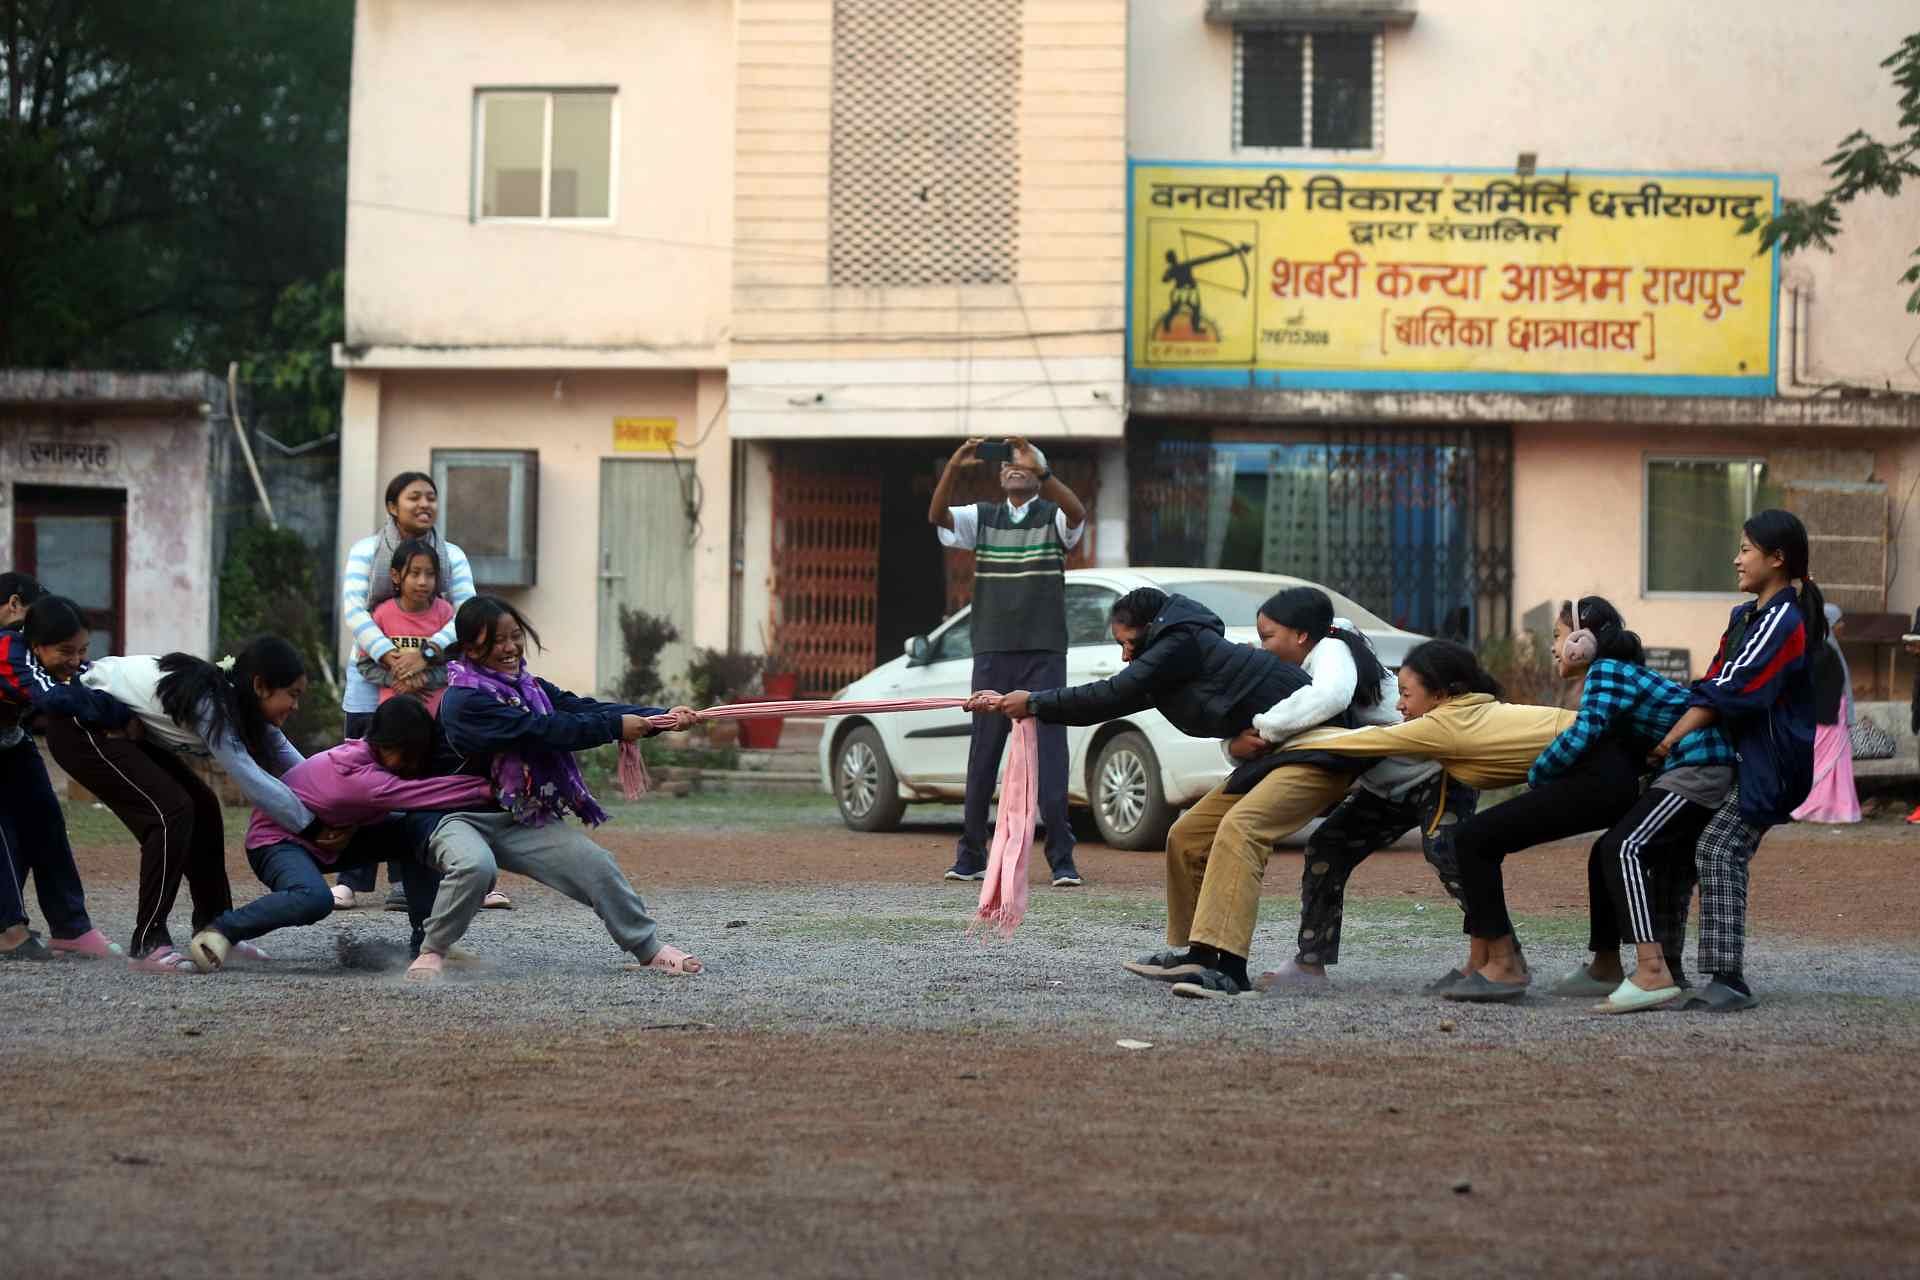 A game of tug-of-war at the Shabri Kanya Ashram | Suraj Singh Bisht | ThePrint